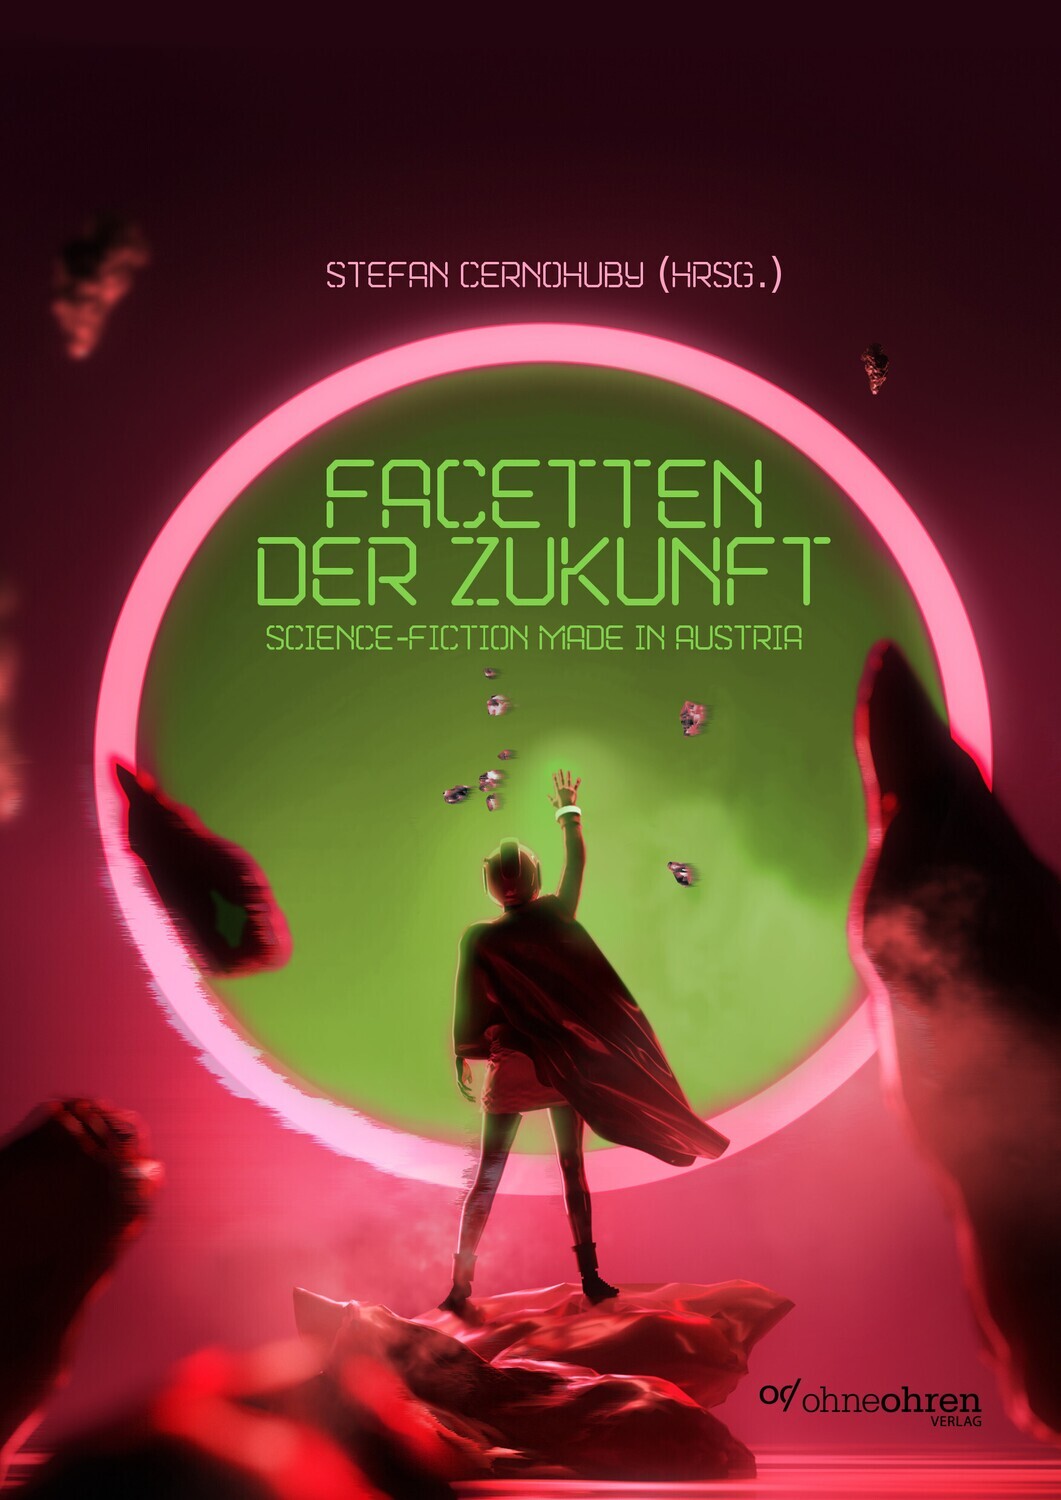 Stefan Cernohuby (Hrsg.): Facetten der Zukunft (Science-Fiction made in Austria)